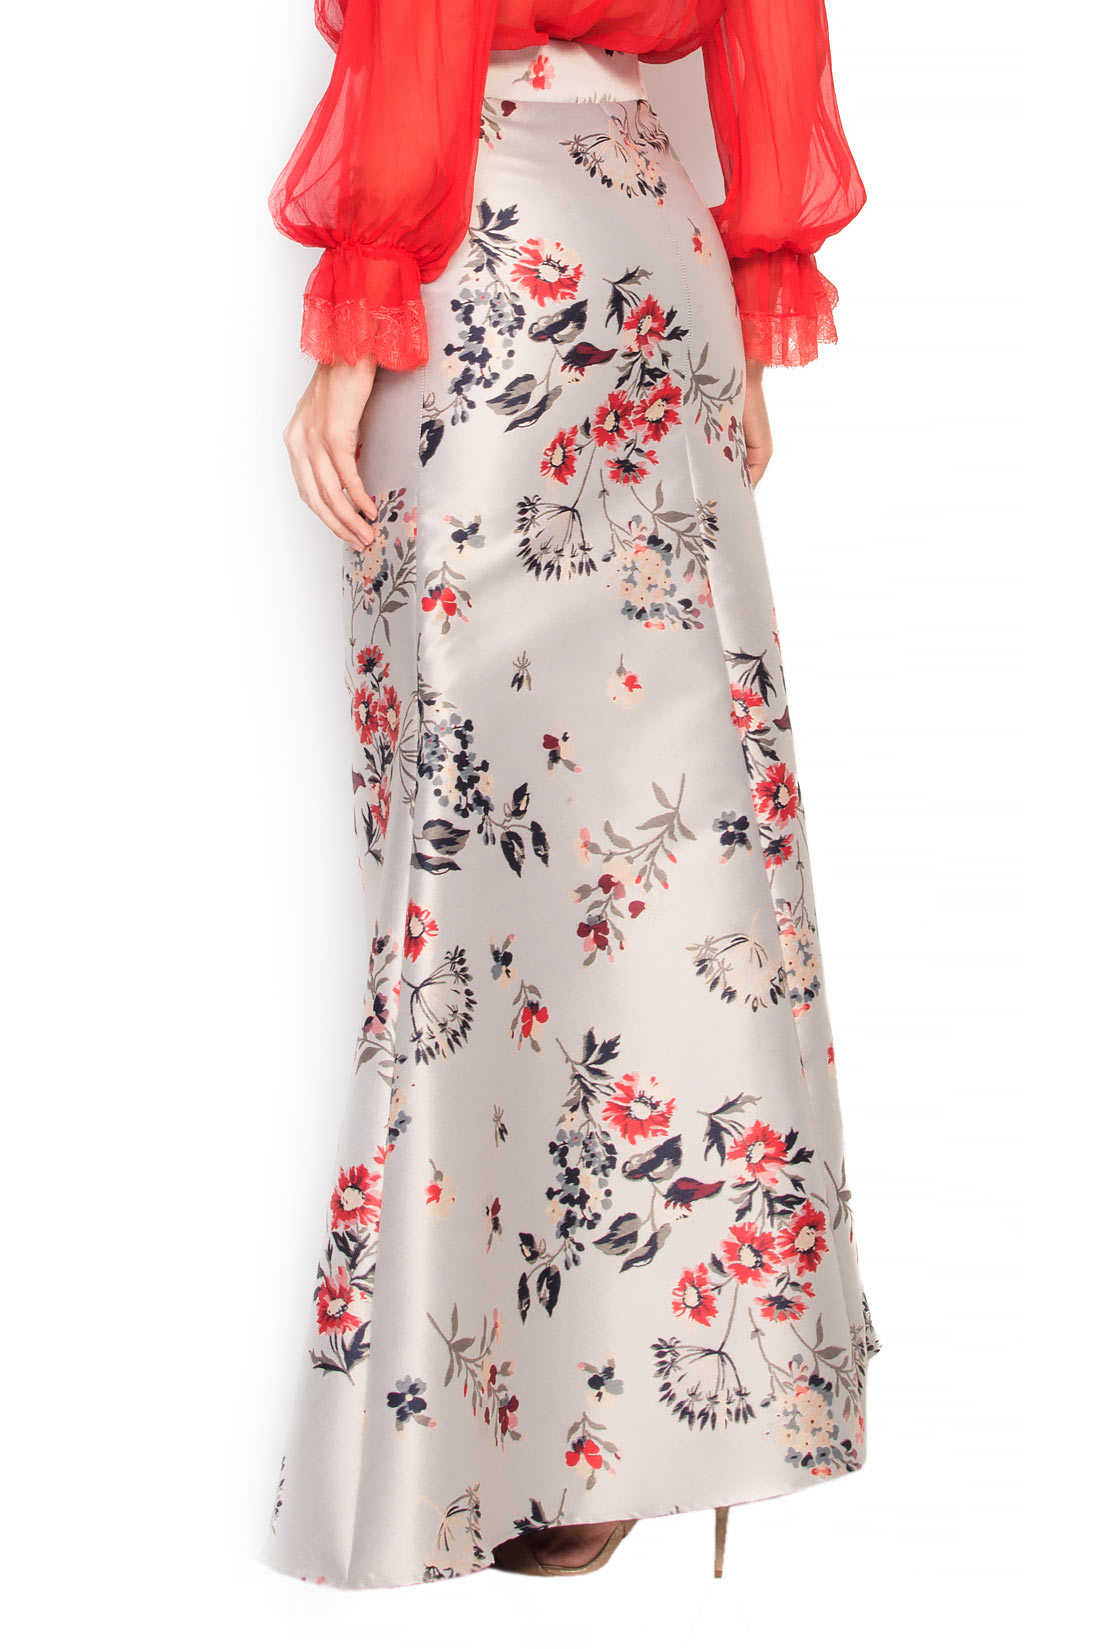 Floral-print jacquard maxi skirt Elena Perseil image 2